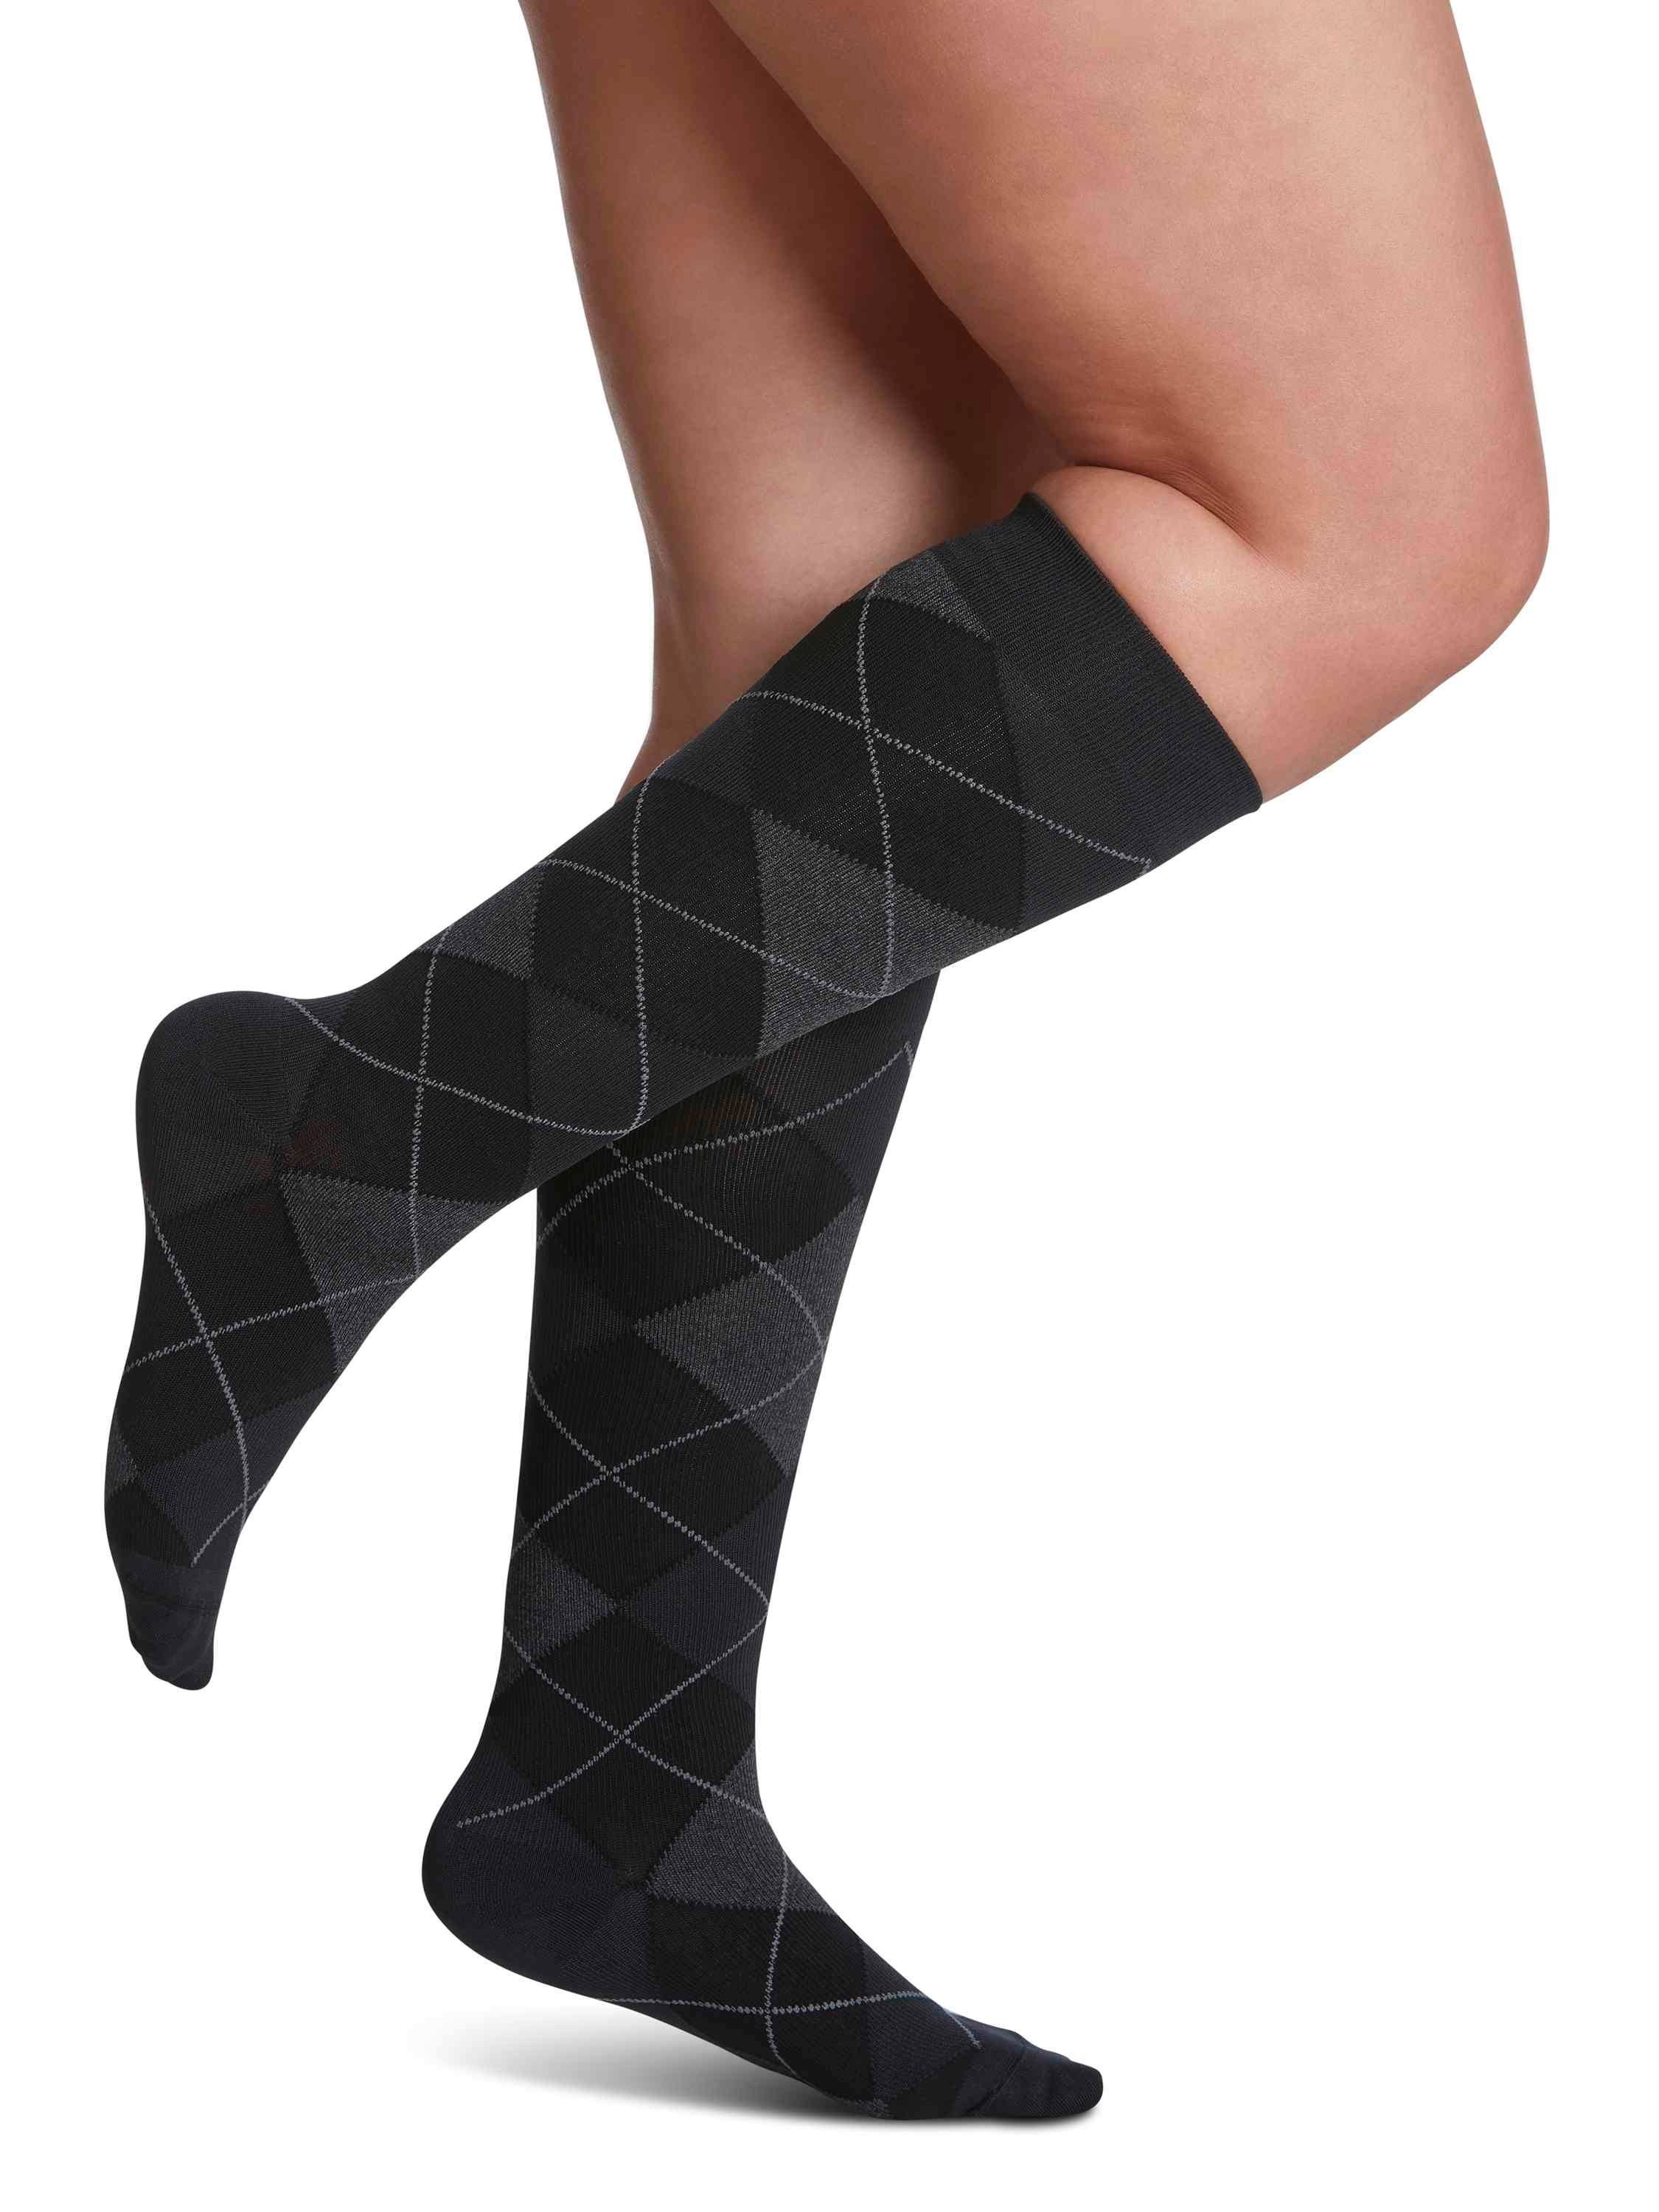 Sigvaris Women's Argyle Microfiber Socks 15-20 mmHg, B / Graphite